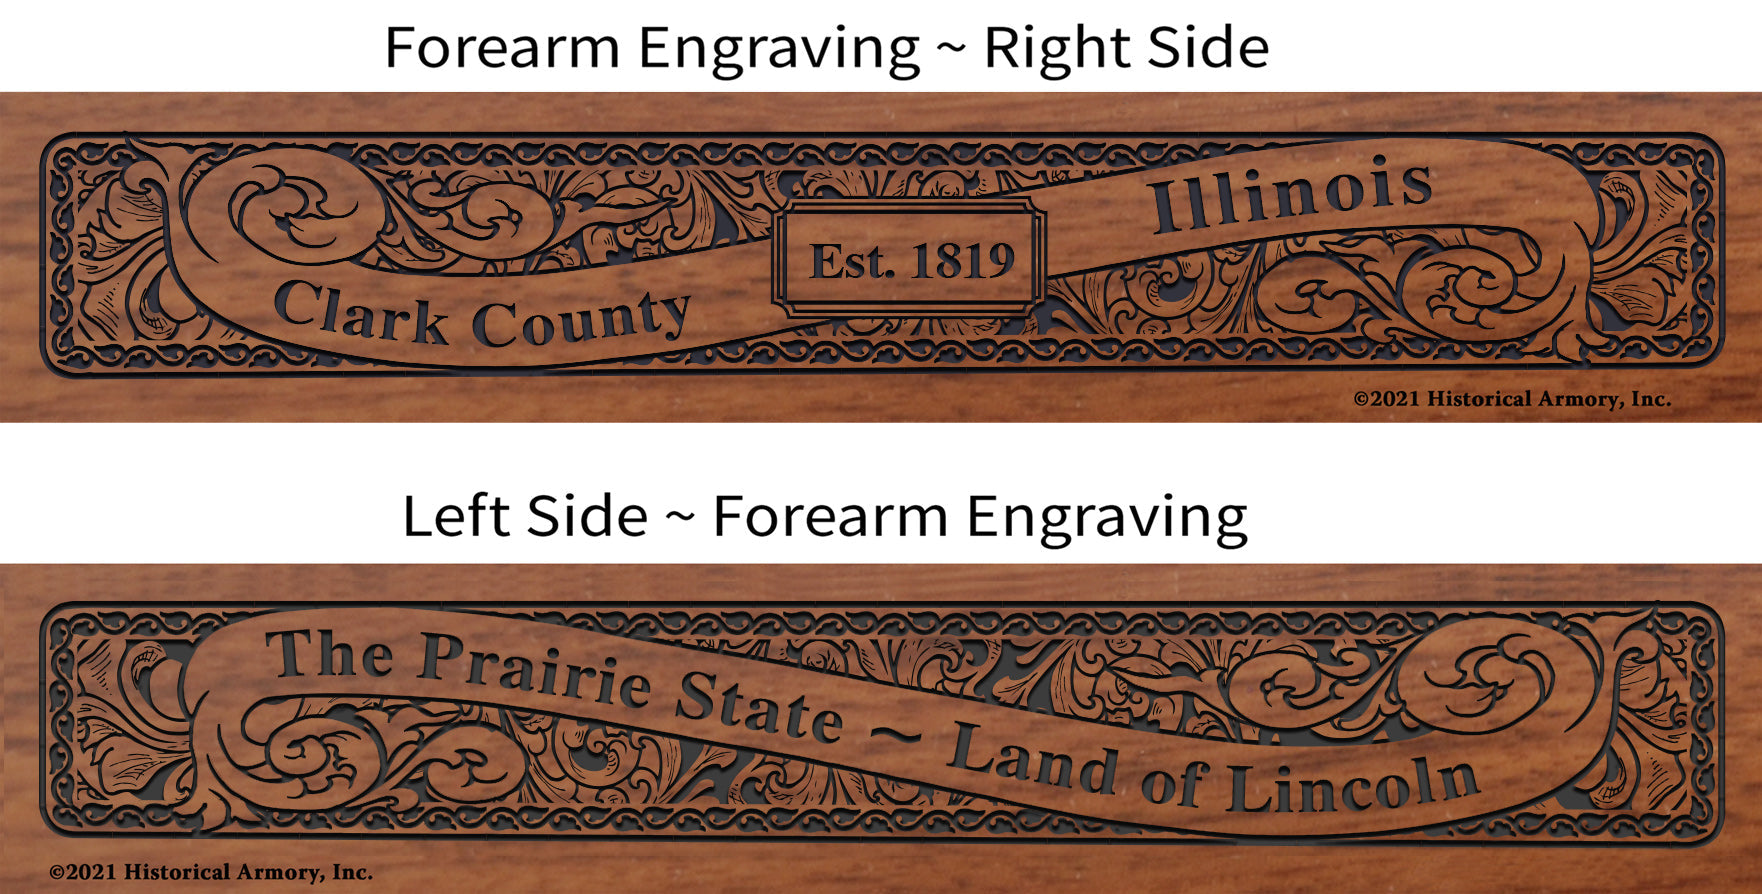 Clark County Illinois Establishment and Motto History Engraved Rifle Forearm